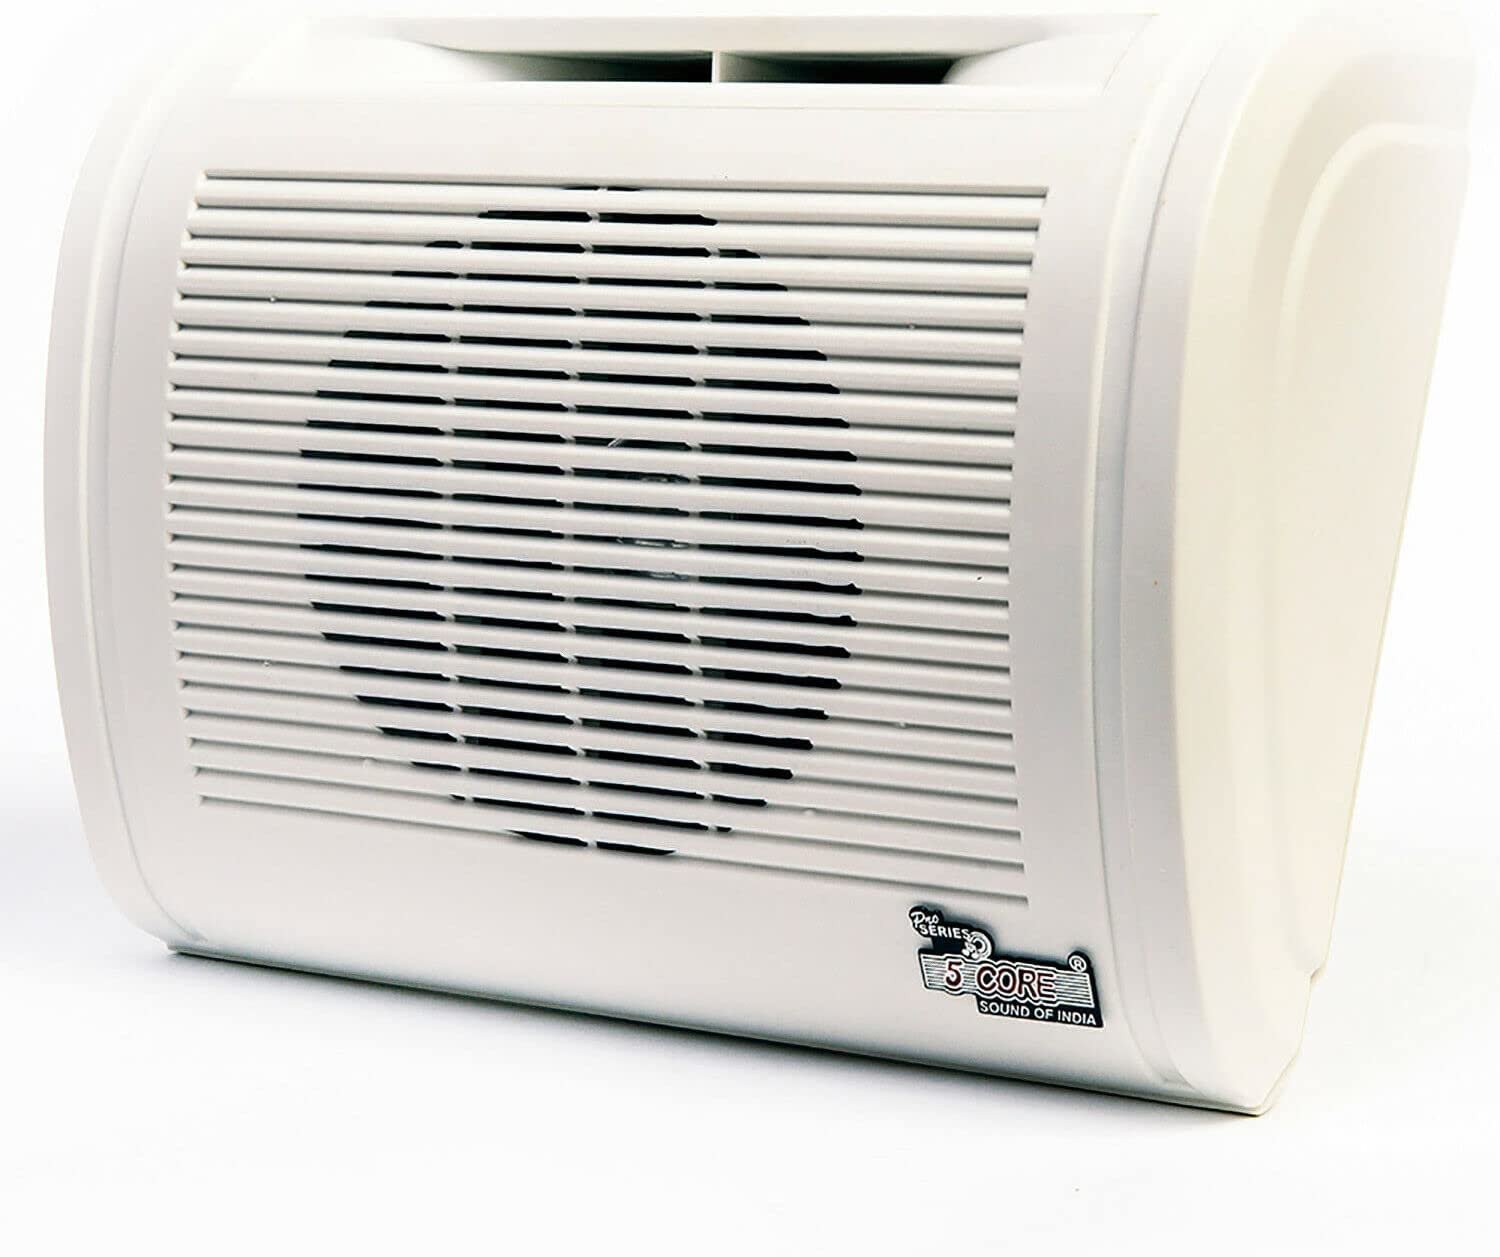 5 Core 5.25 Inch Wall Mount Home Speaker System Indoor/Outdoor Moist Proof, All Weather Resista